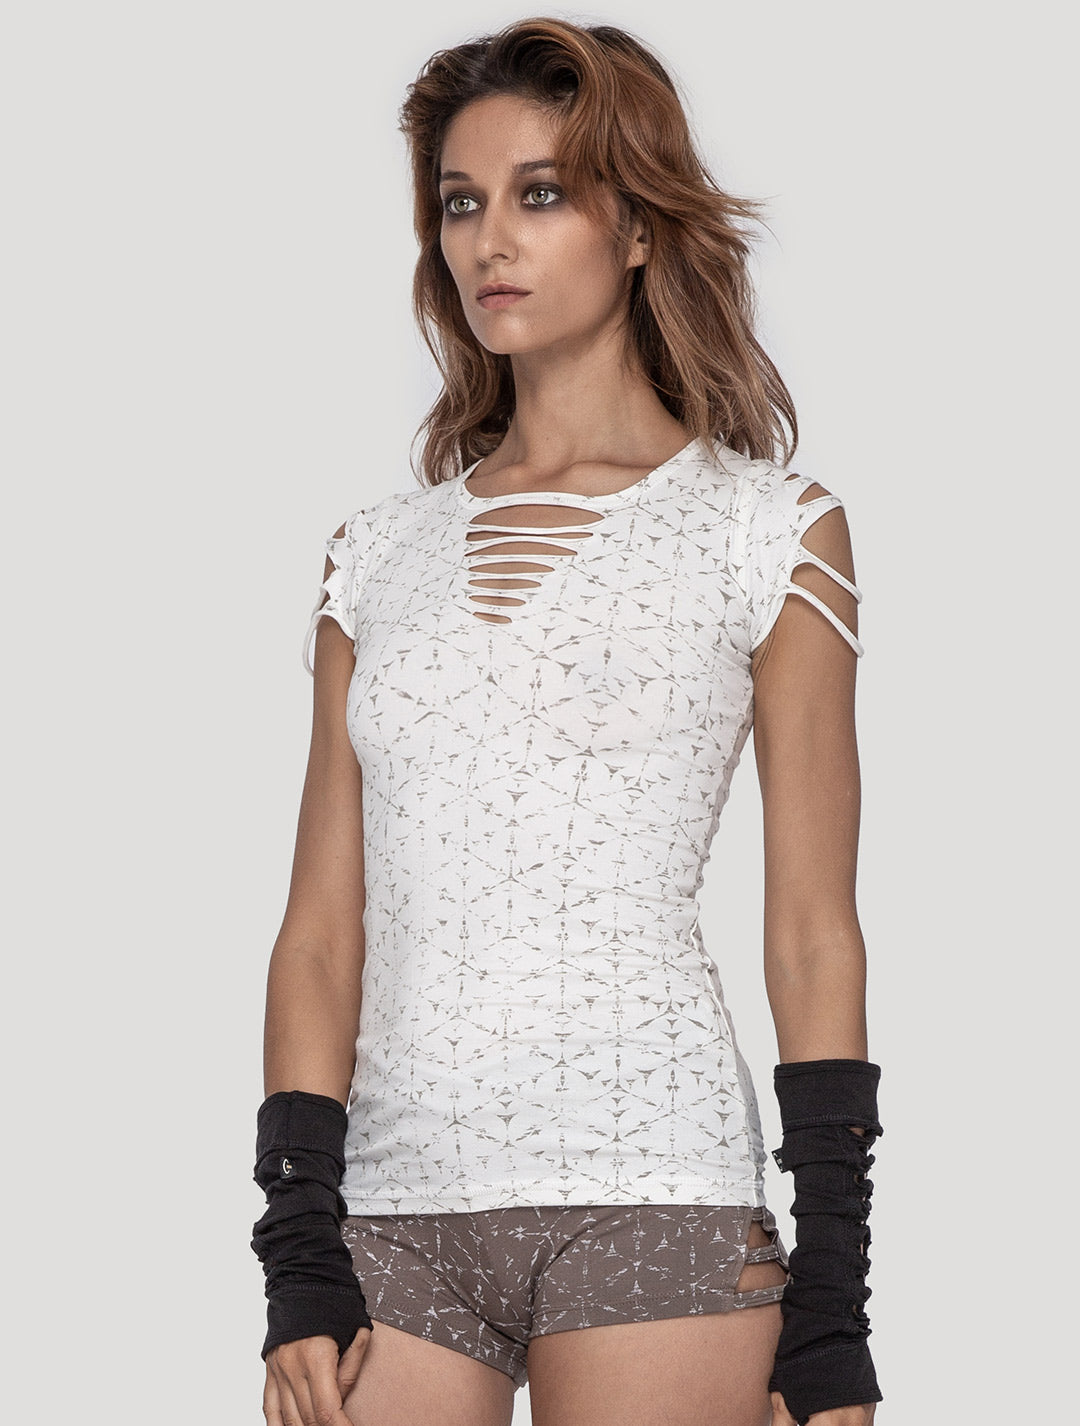 'Polygon' Braided & Printed Organic Cotton Lycra Top - Psylo Fashion